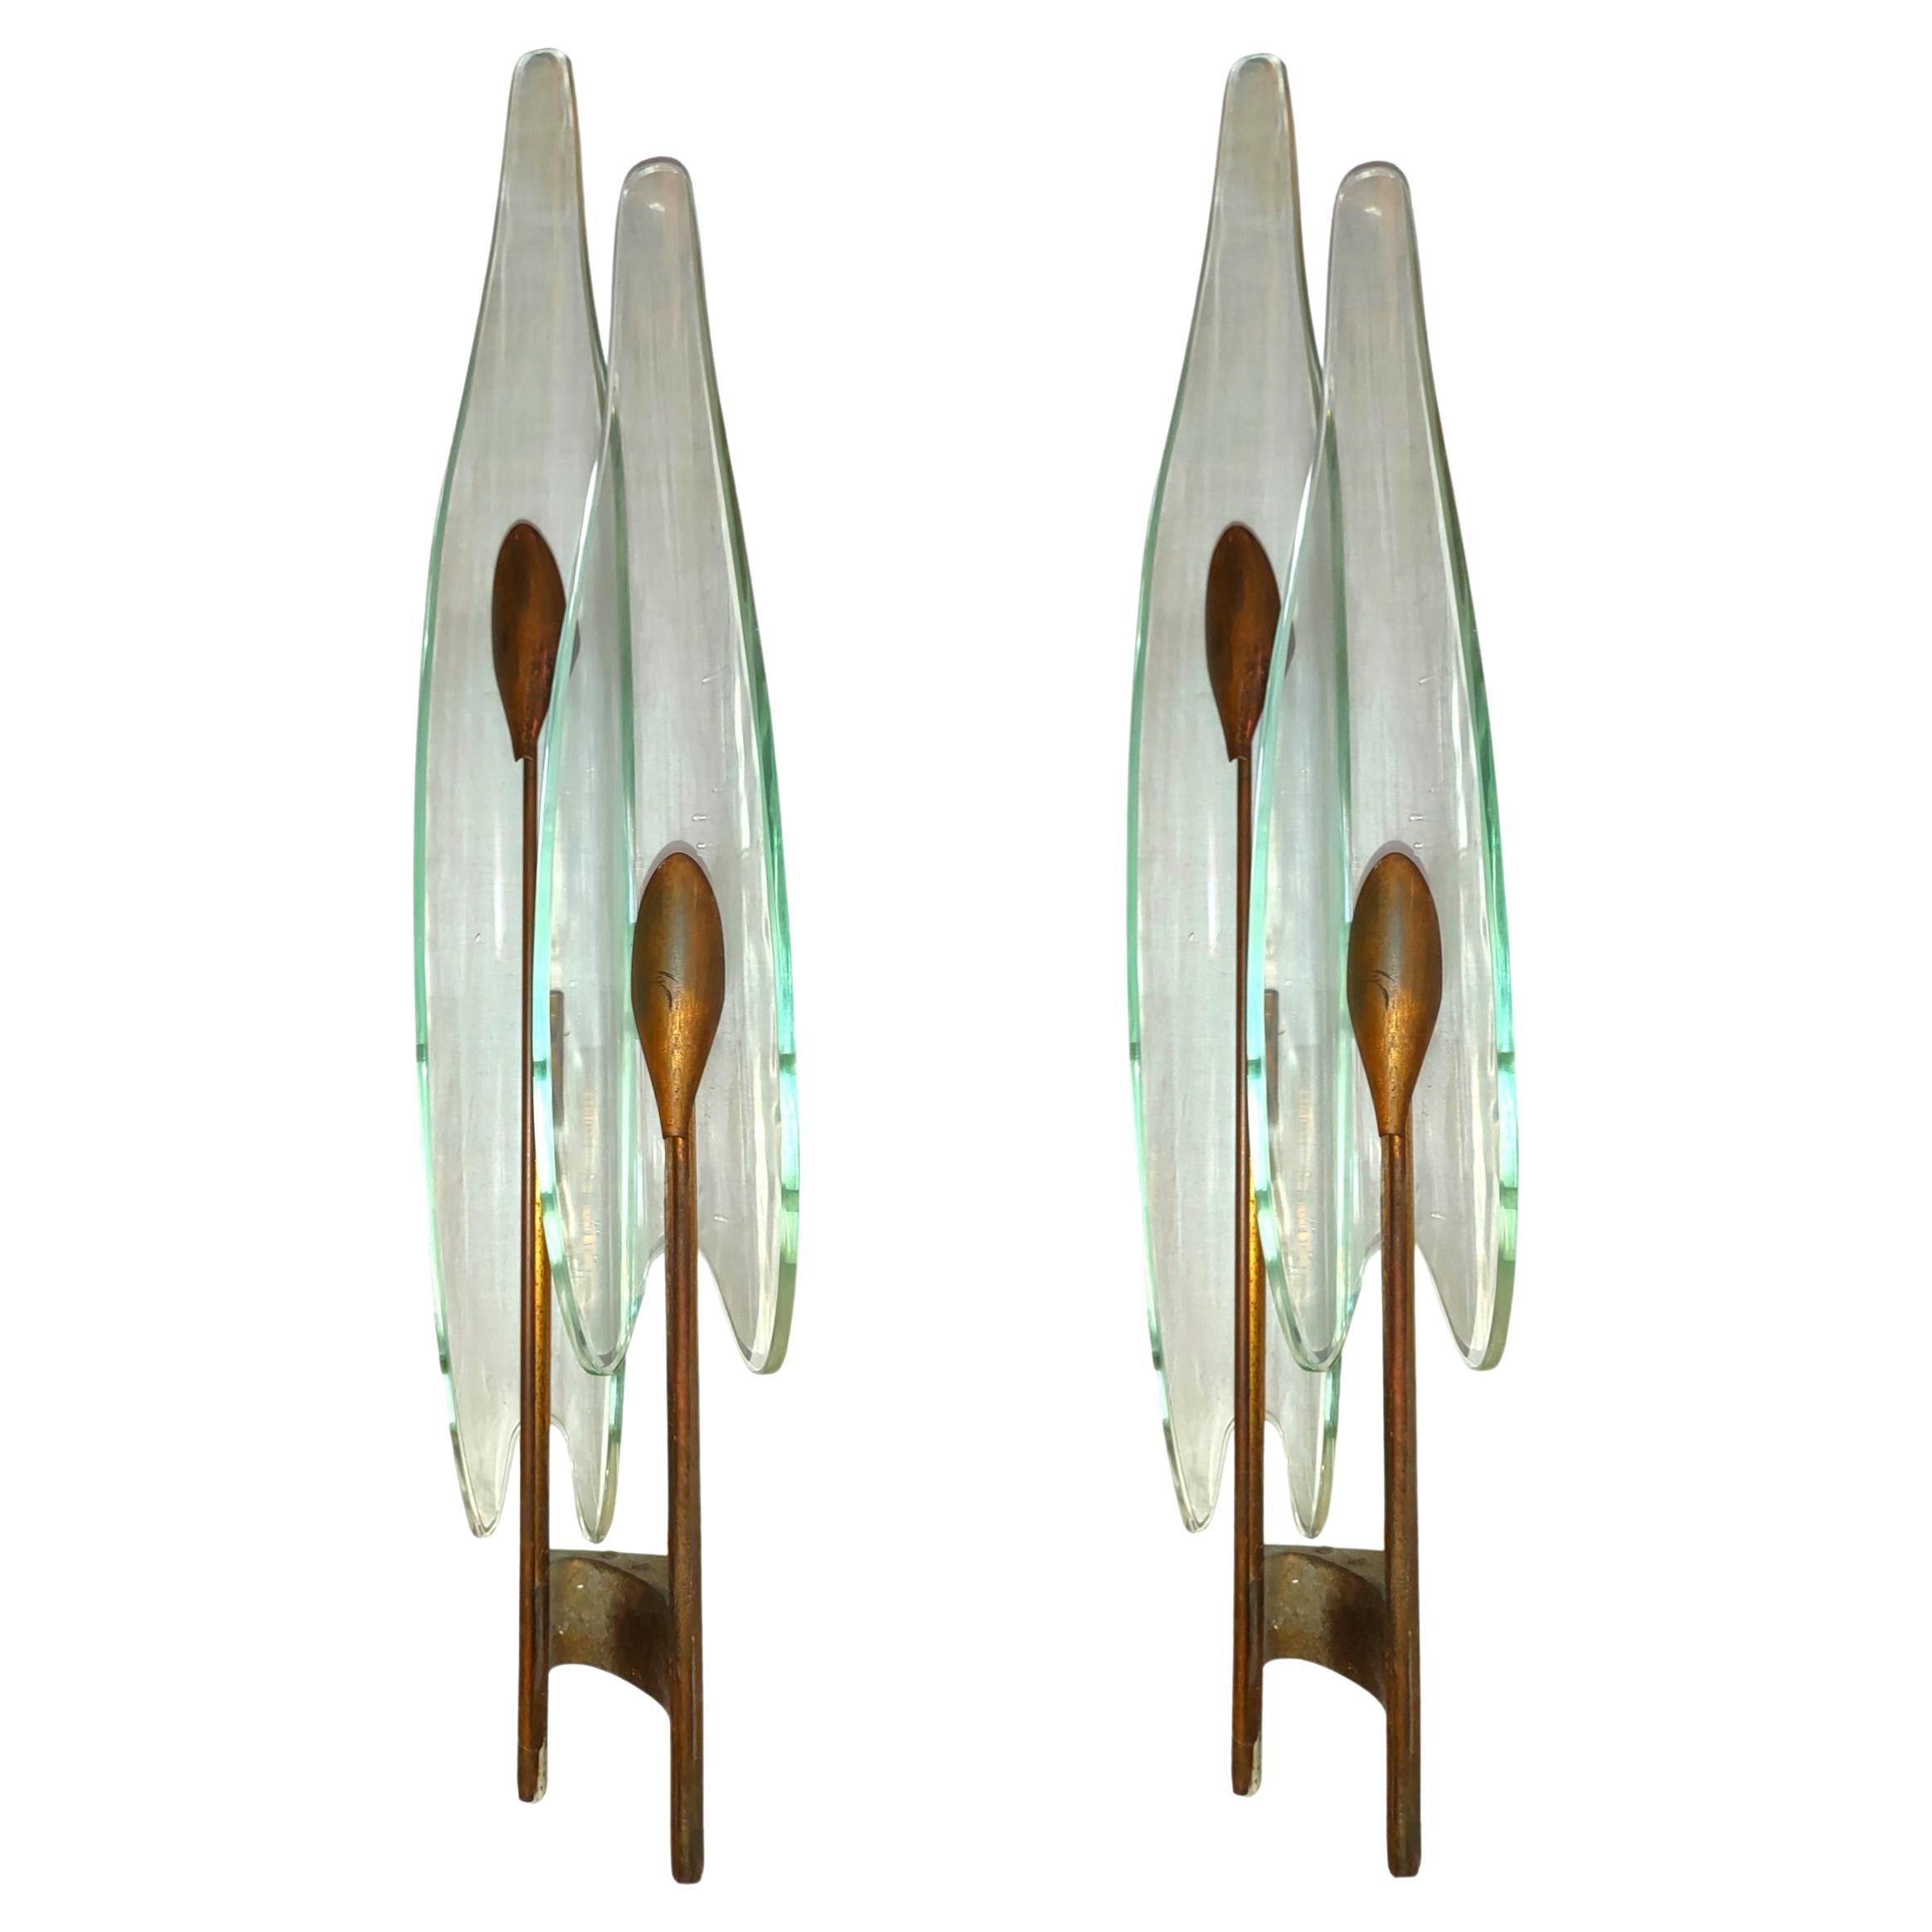 Pair of Dahlia Wall Lamps 1461 Model Design Max Ingrand for Fontana Arte 1950